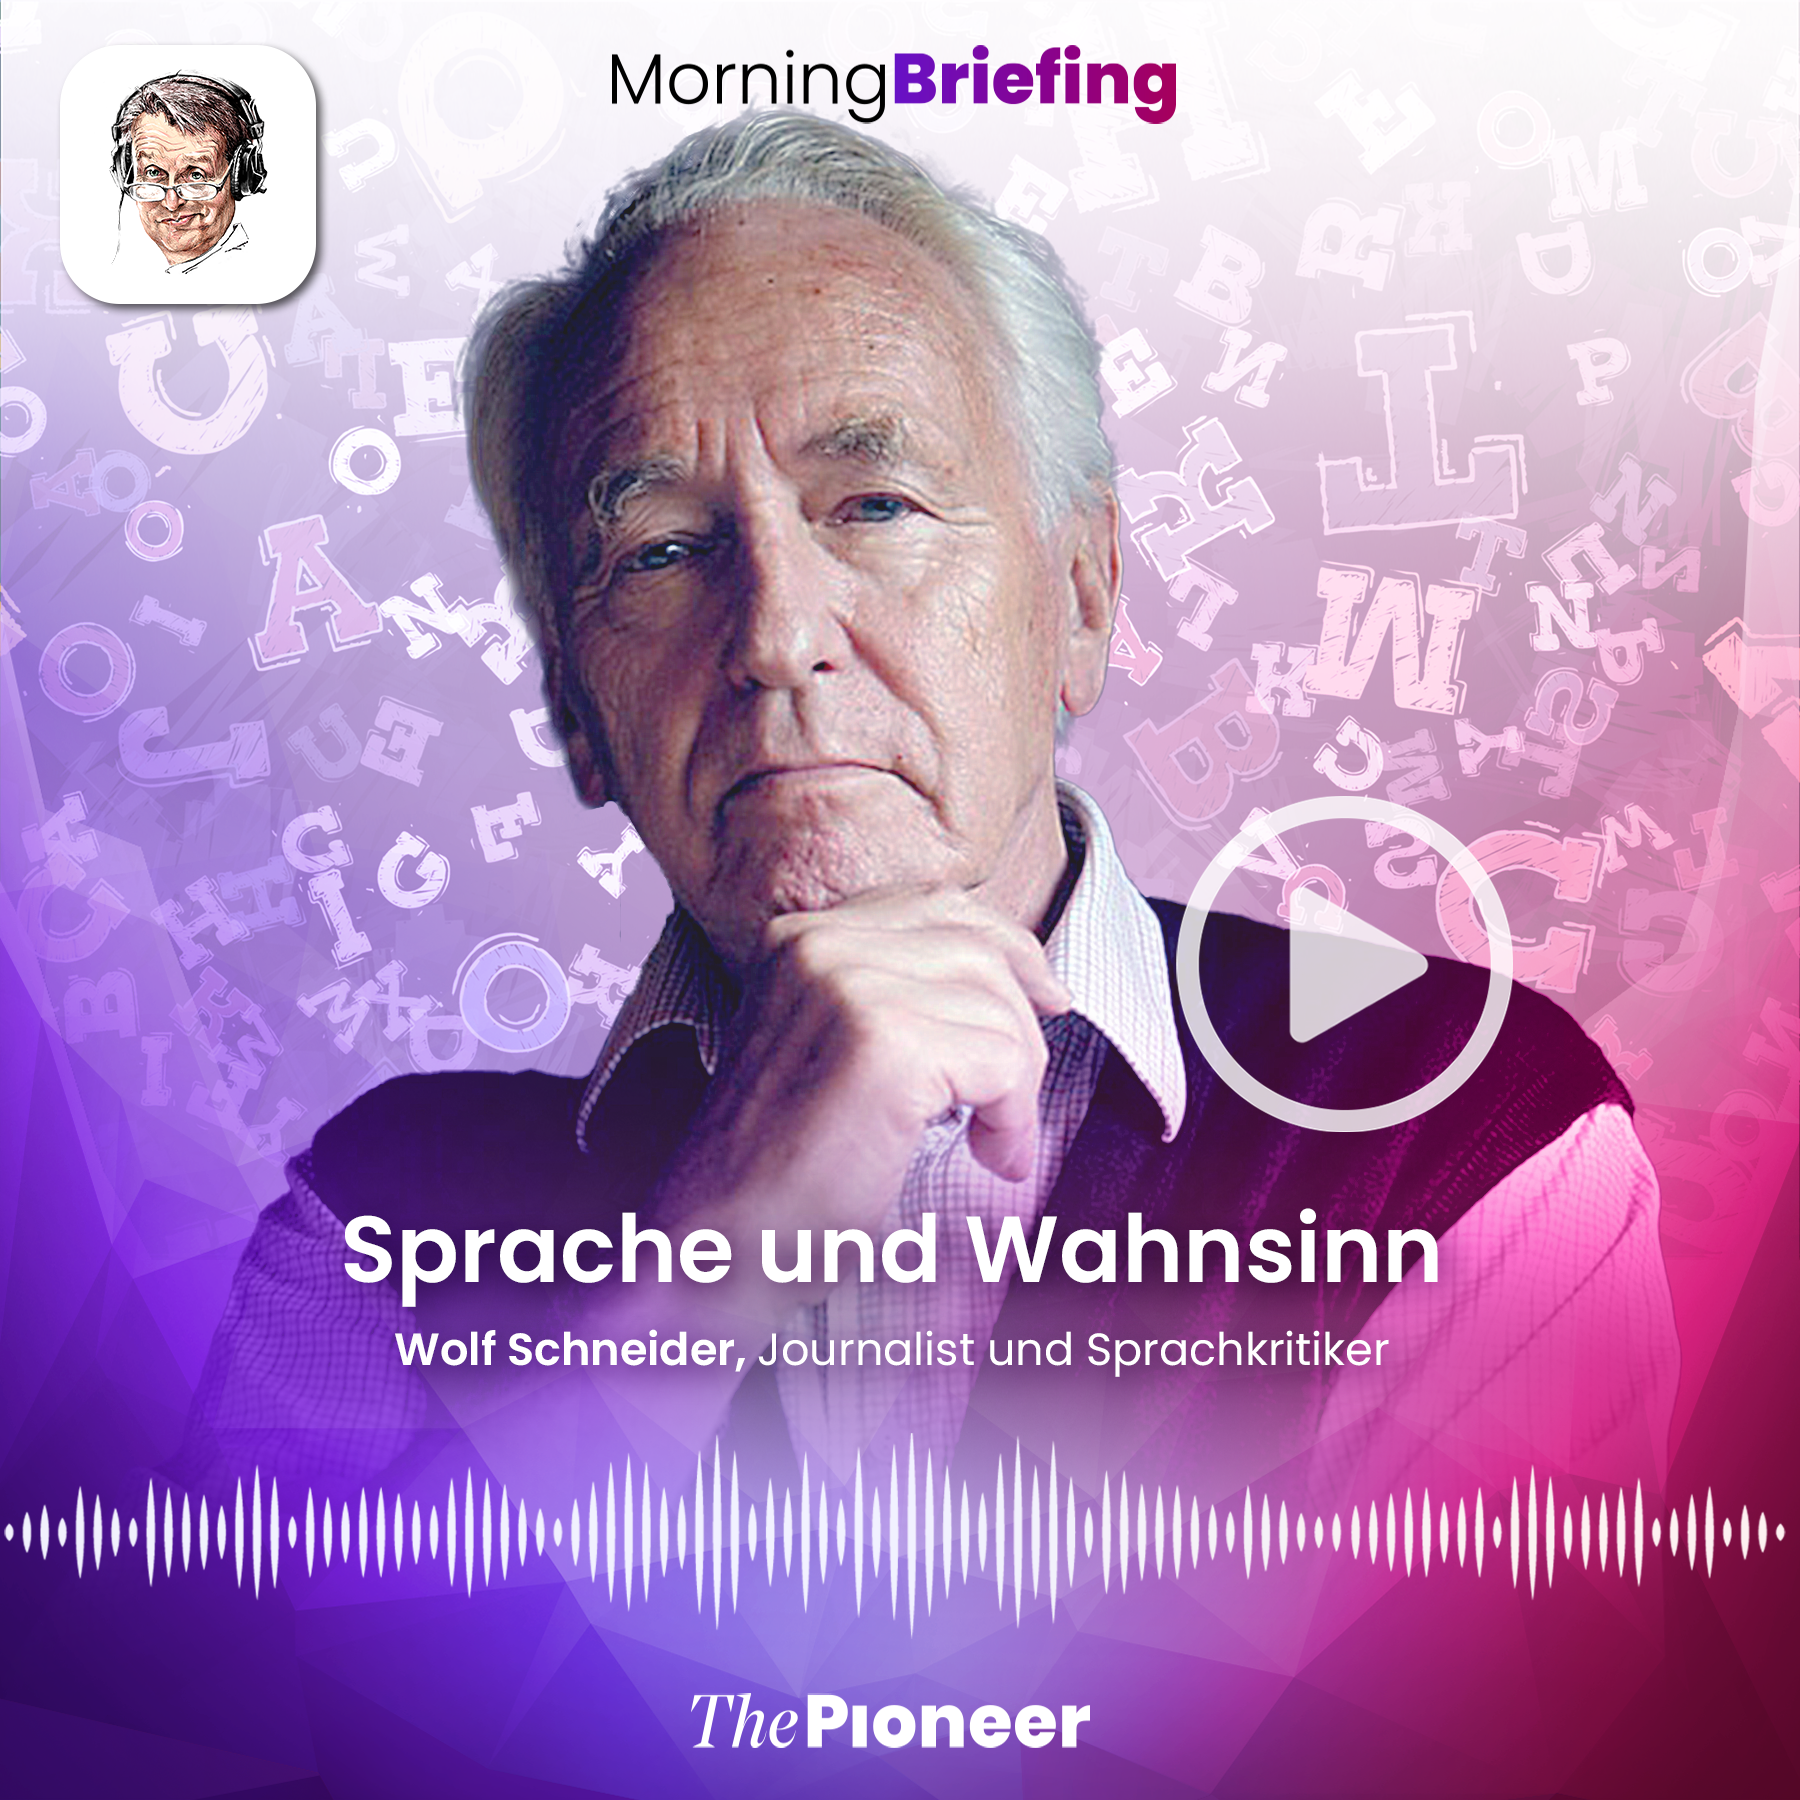 20201103-image-media pioneer-morning briefing-Kachel Schneider